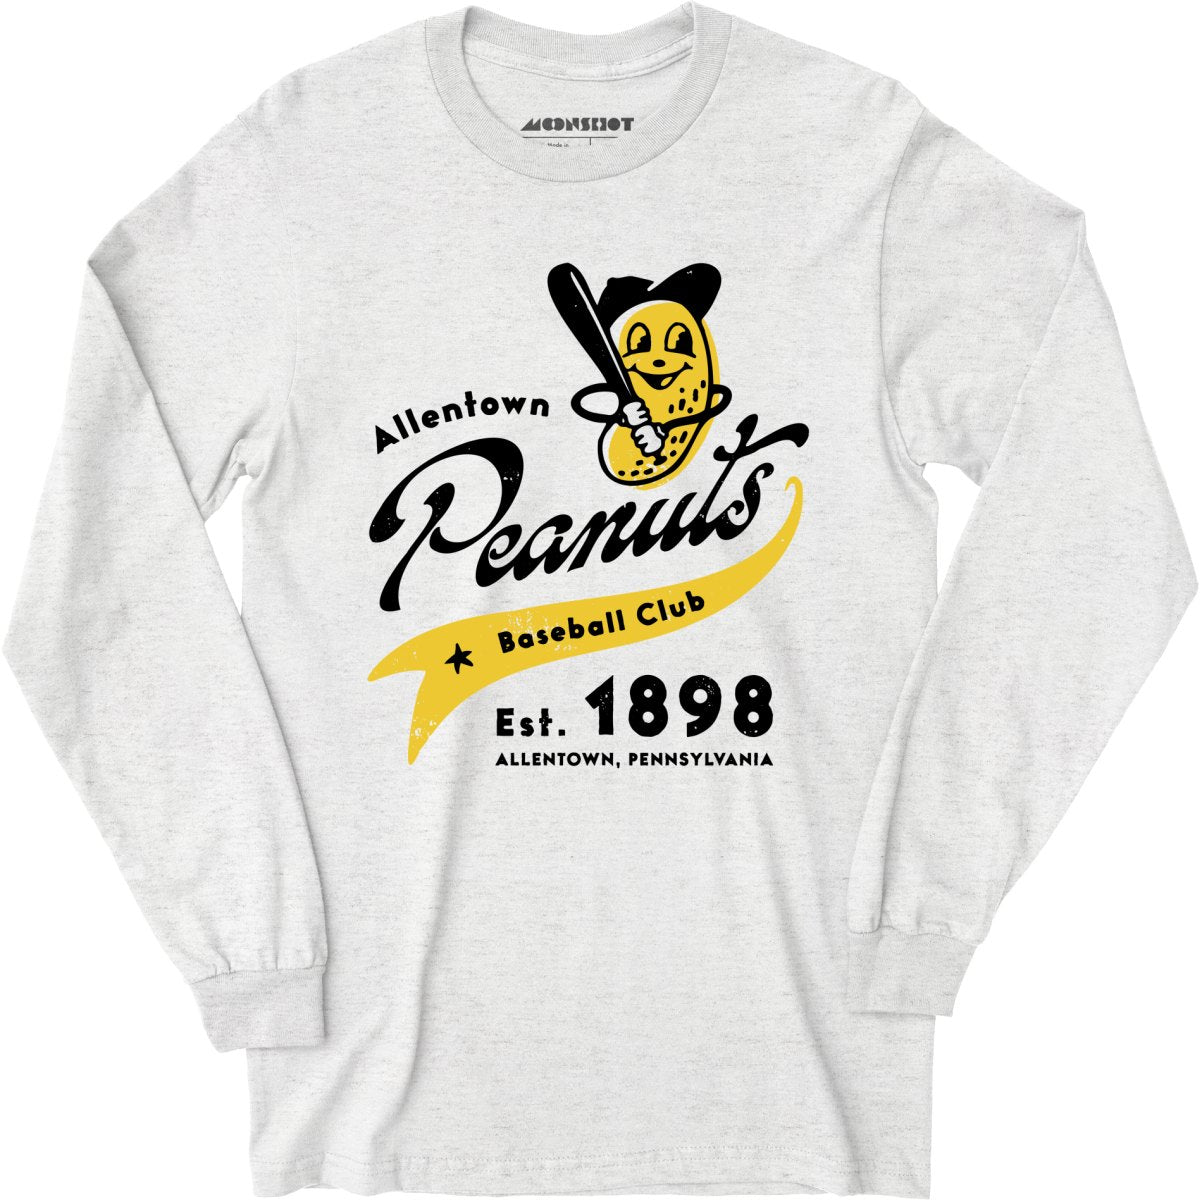 Allentown Peanuts - Pennsylvania - Vintage Defunct Baseball Teams - Long Sleeve T-Shirt